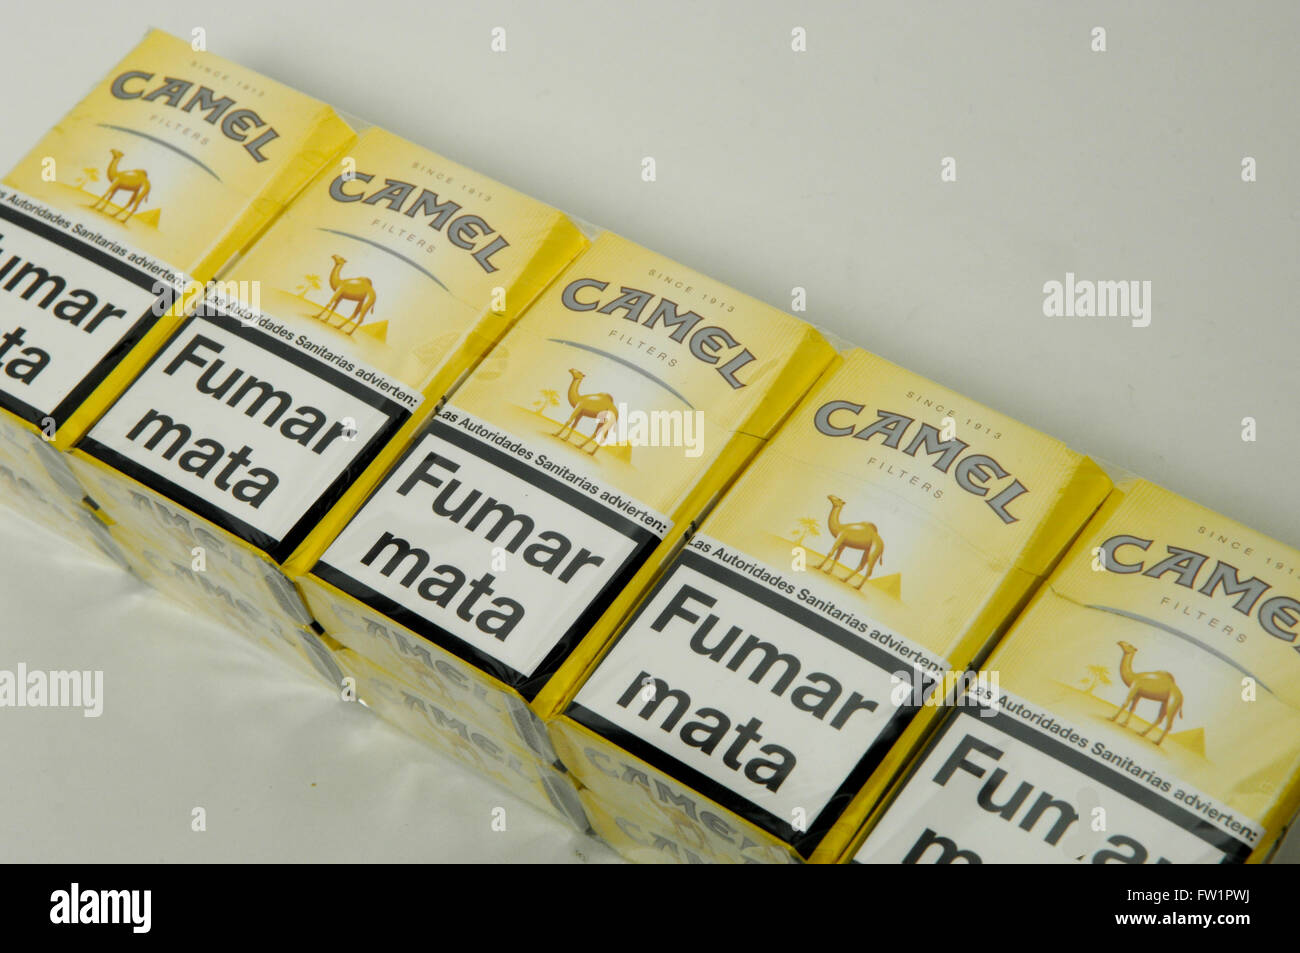 Carton of Camel Cigarettes Tobacco Stock Photo - Alamy